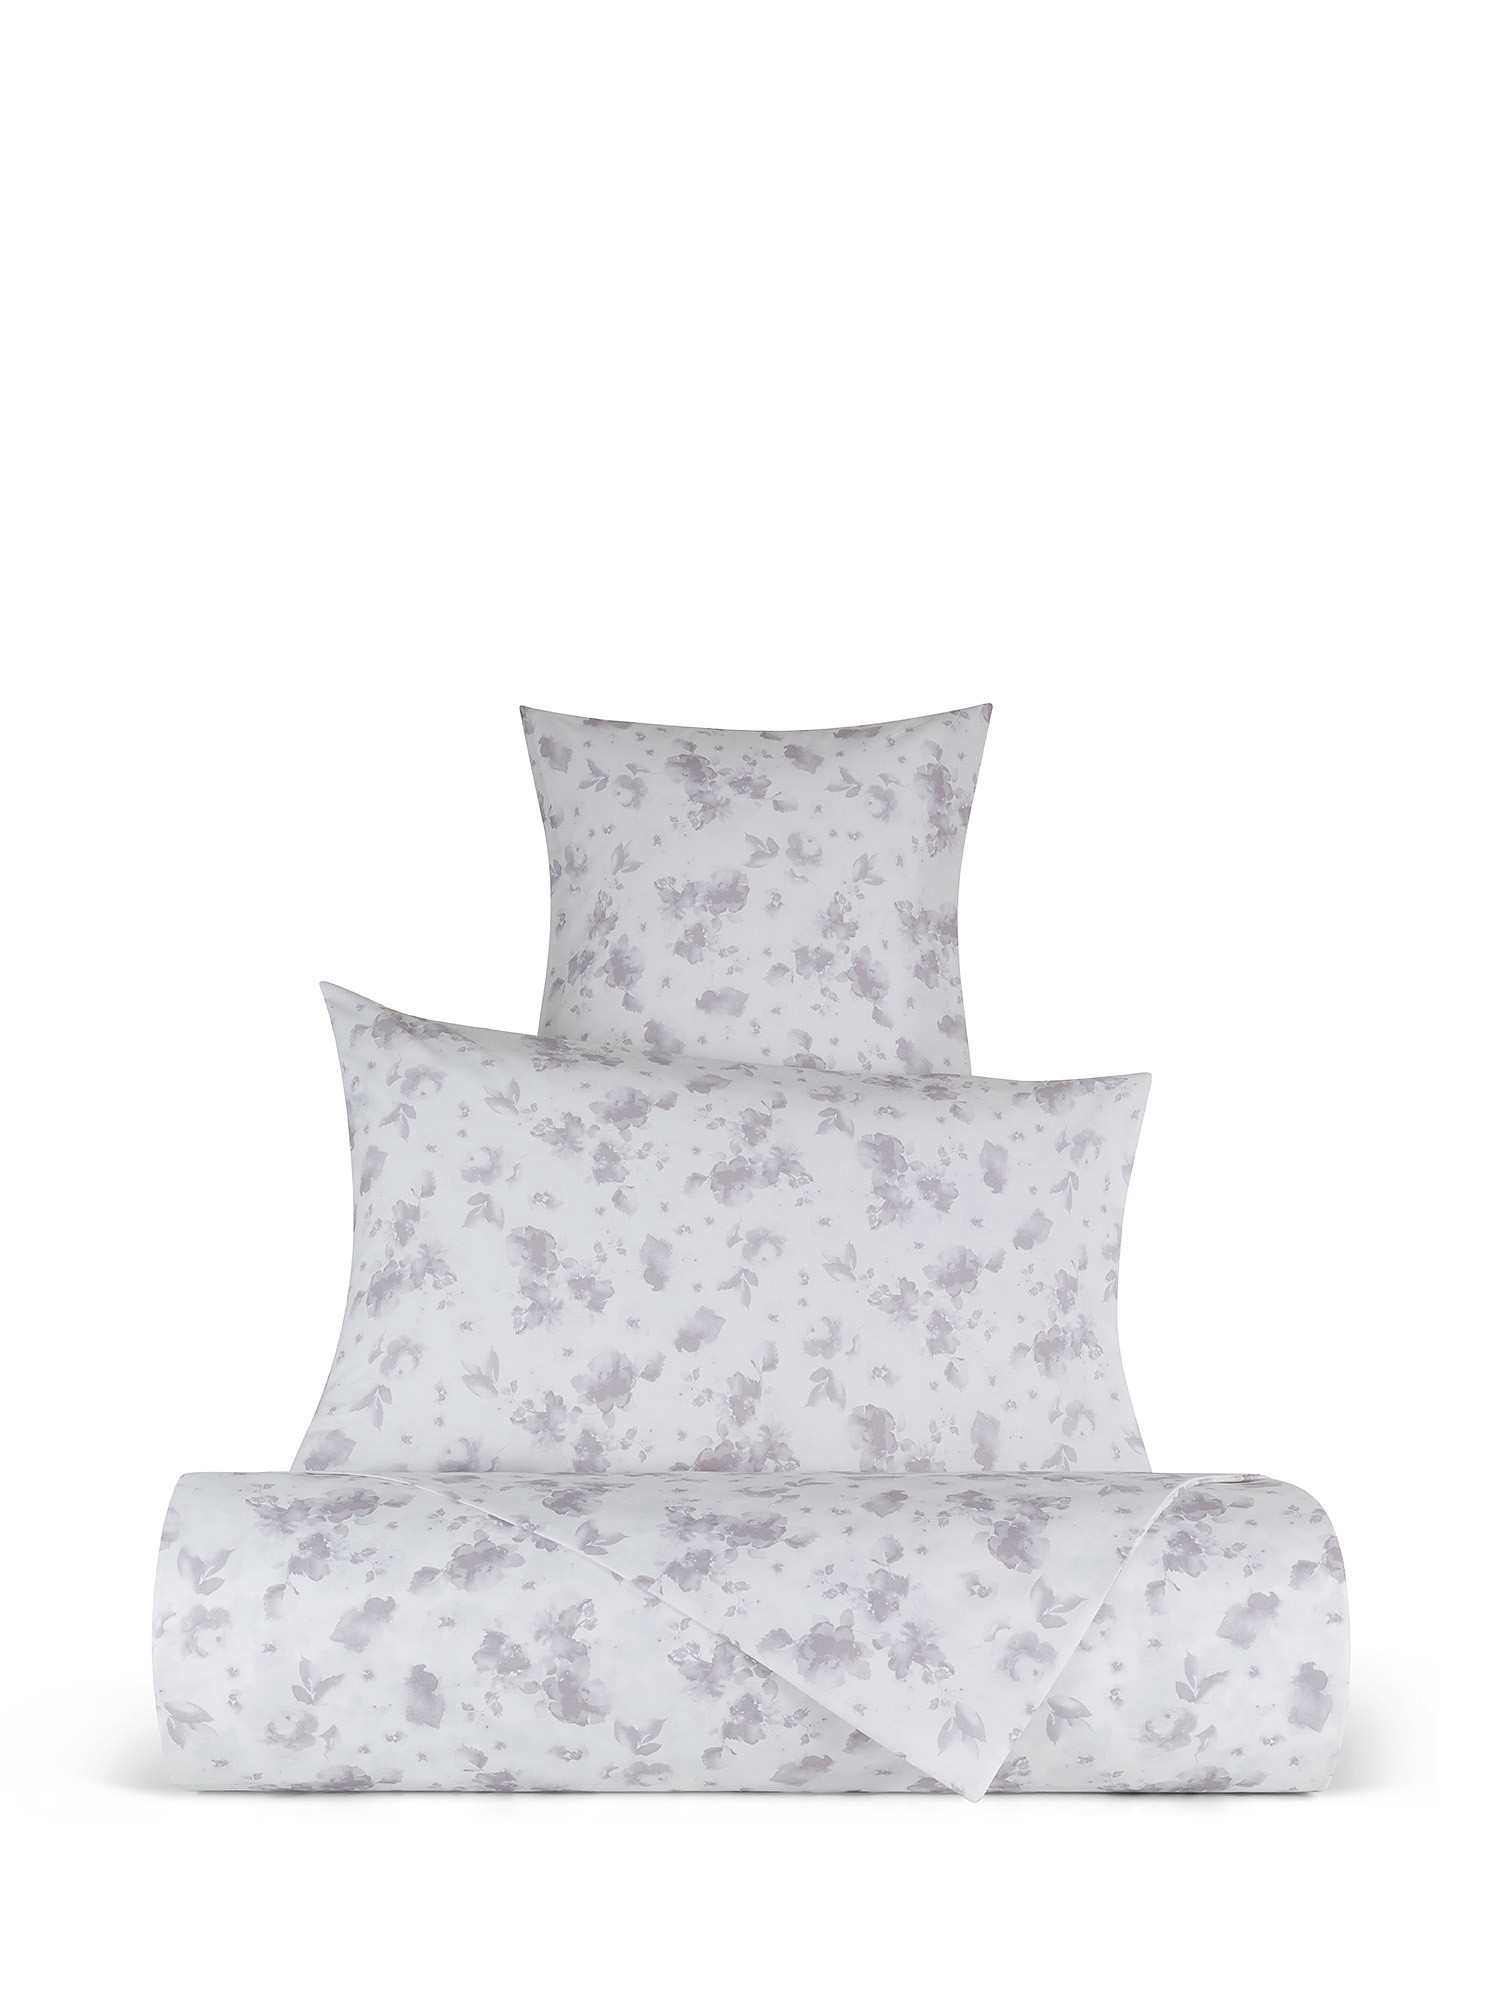 Federa cotone percalle motivo floreale Portofino, Bianco, large image number 2